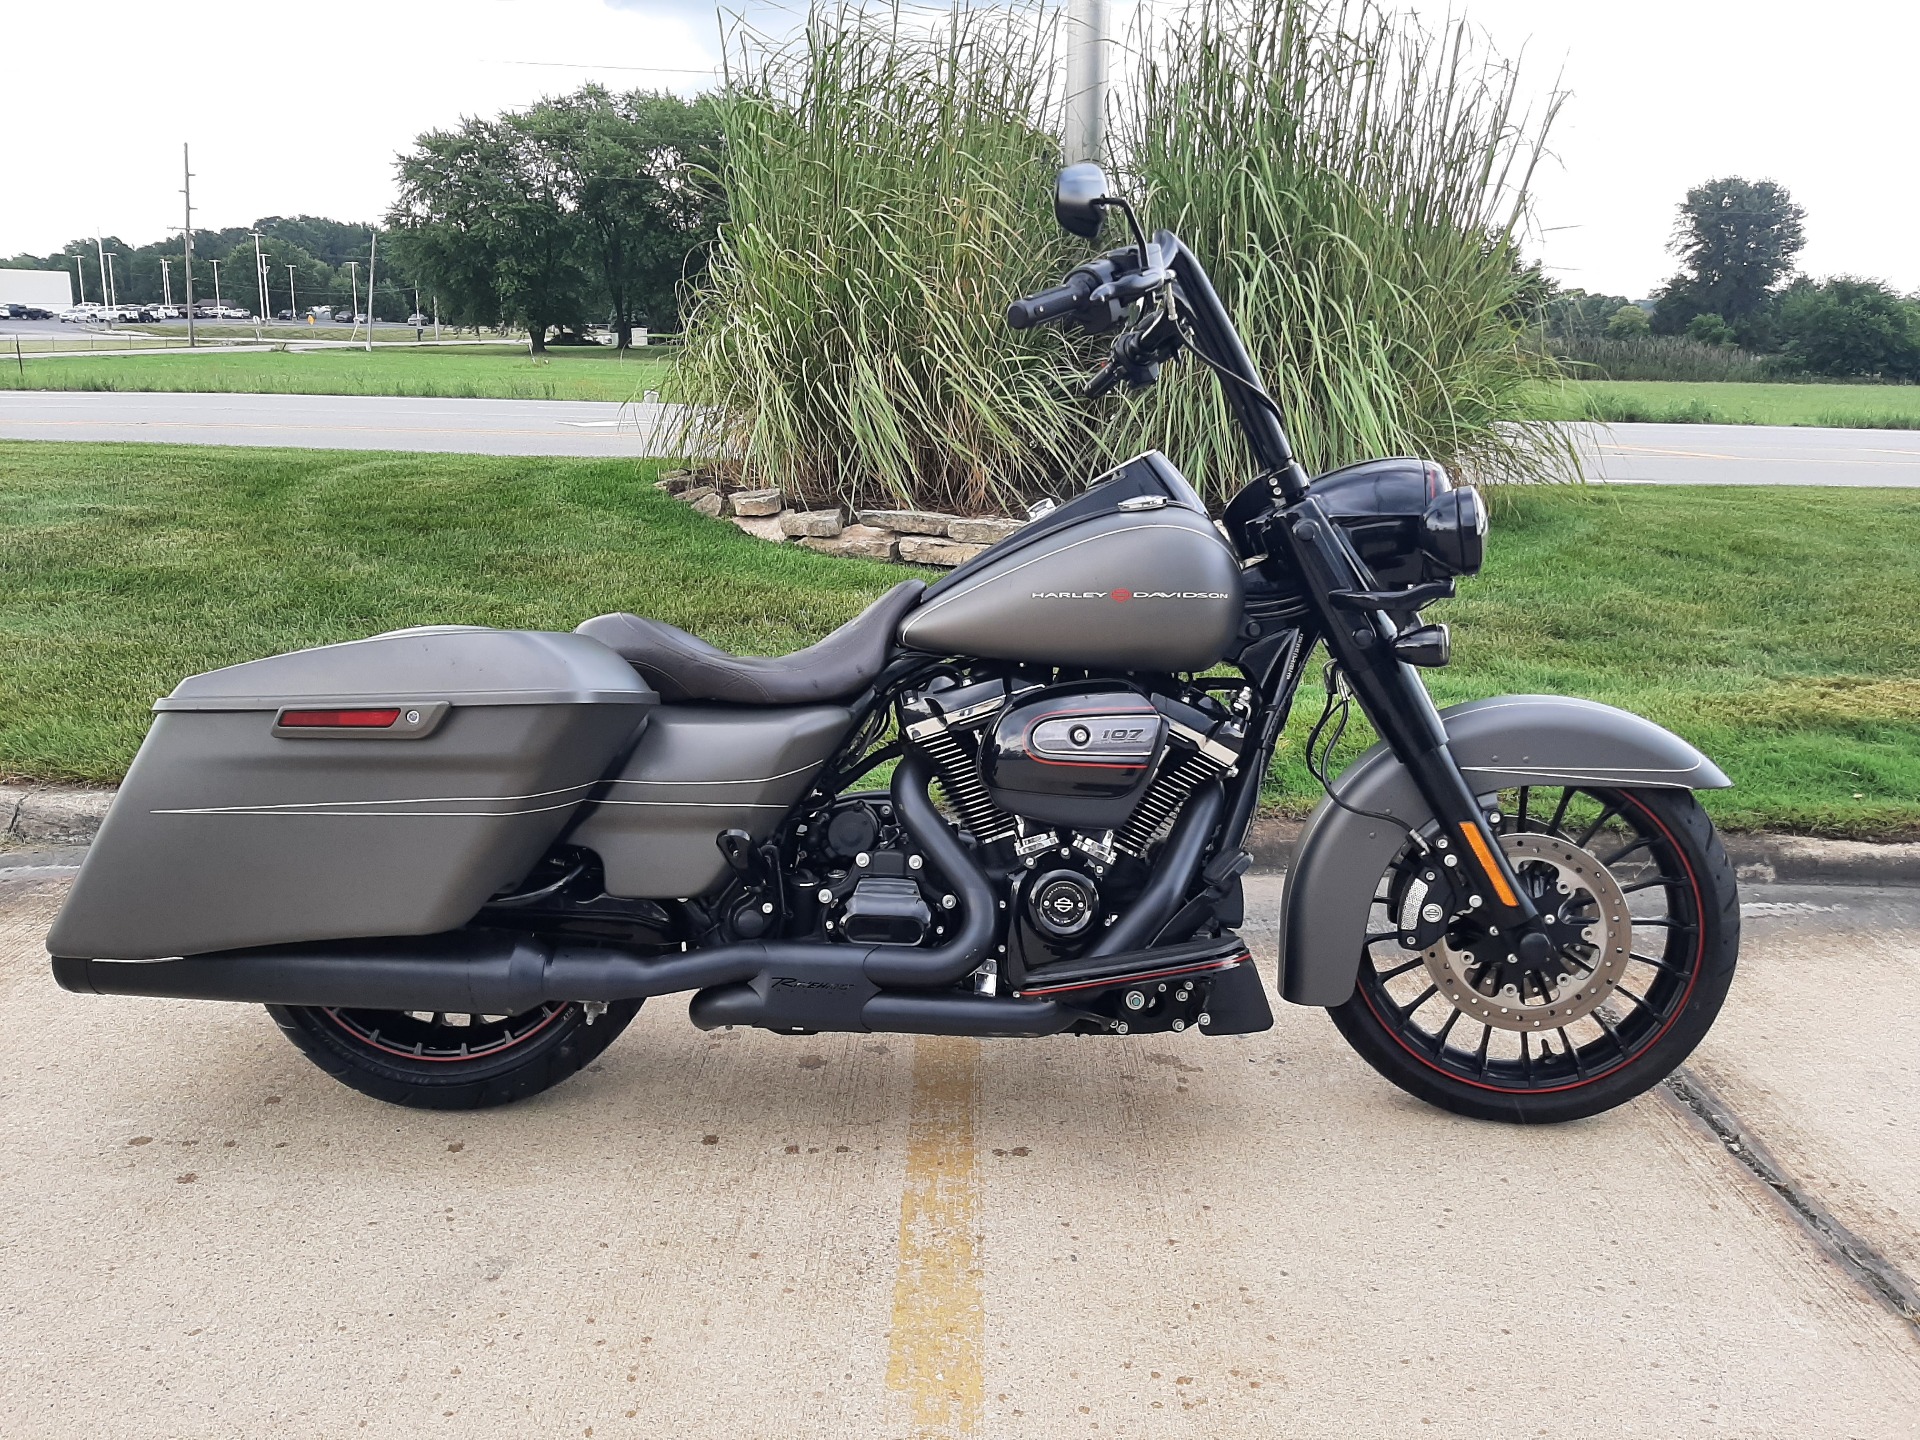 2018 Harley-Davidson RoadKing Special in Michigan City, Indiana - Photo 1